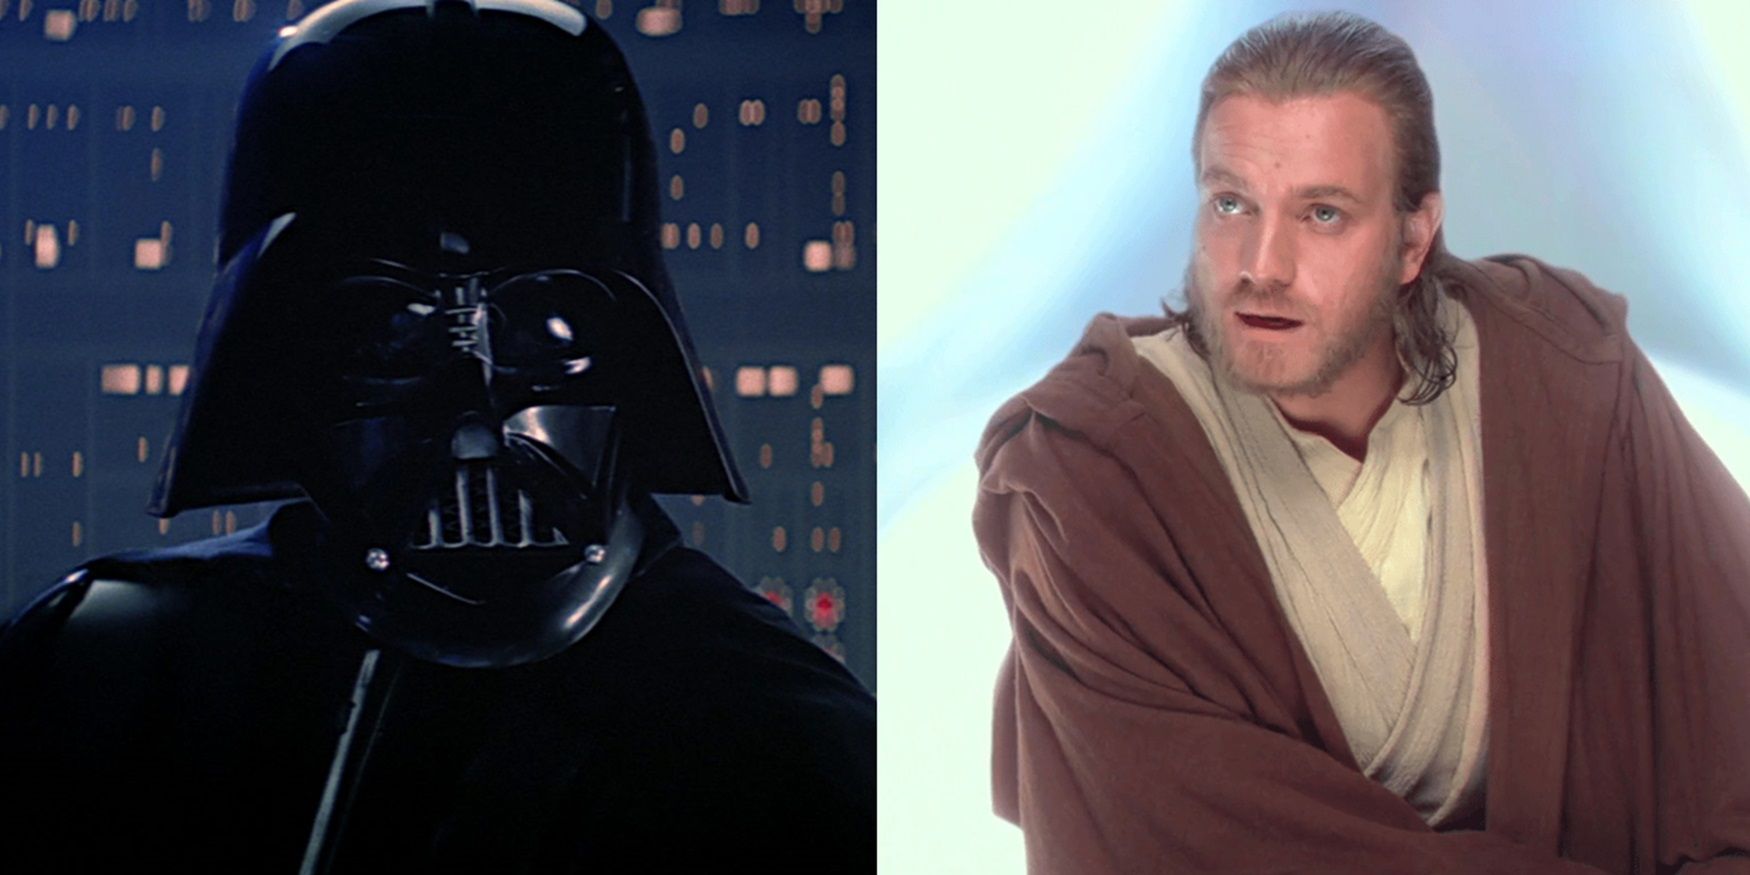 Darth Vader in The Empire Strikes Back and Obi-Wan Kenobi in Attack of the Clones